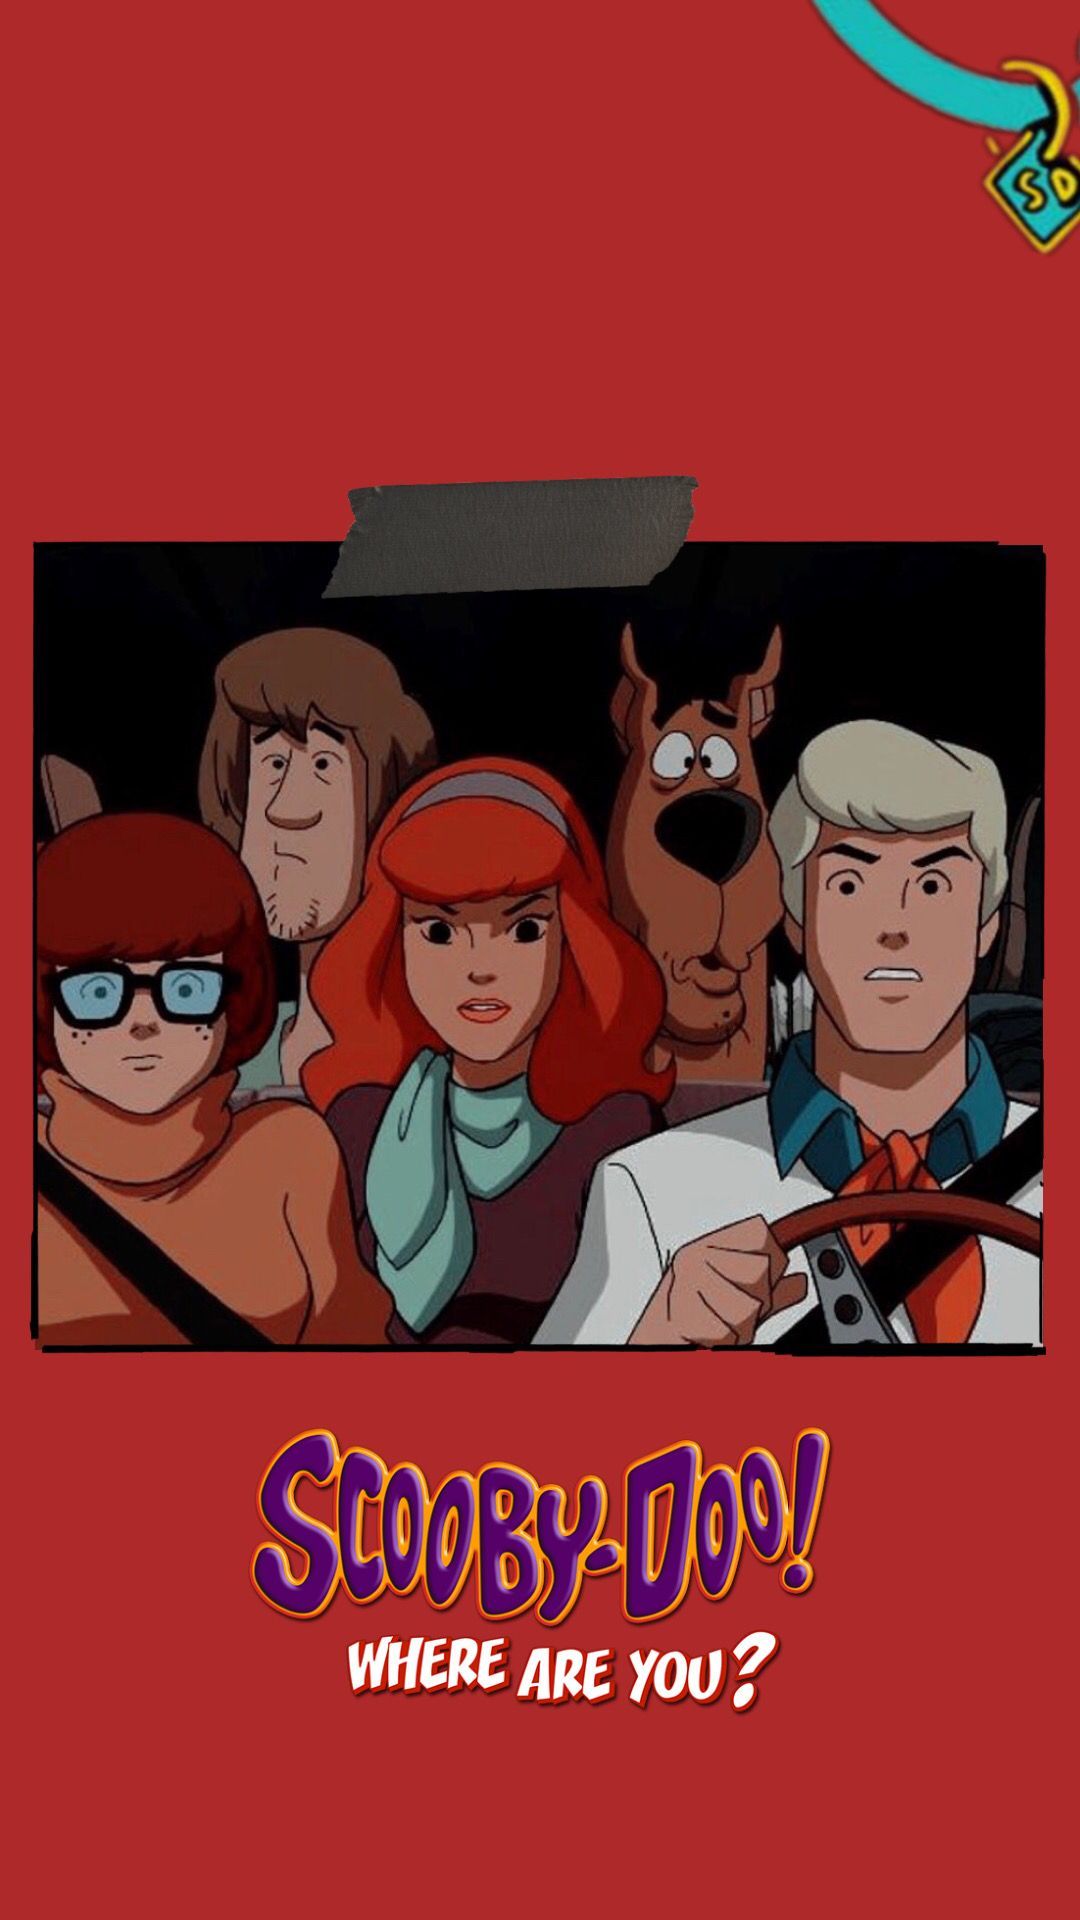  Scooby-Doo Hintergrundbild 1080x1920. Scooby Doo, Where Are You?”. Scooby doo image, Cartoon wallpaper, Cartoon wallpaper iphone